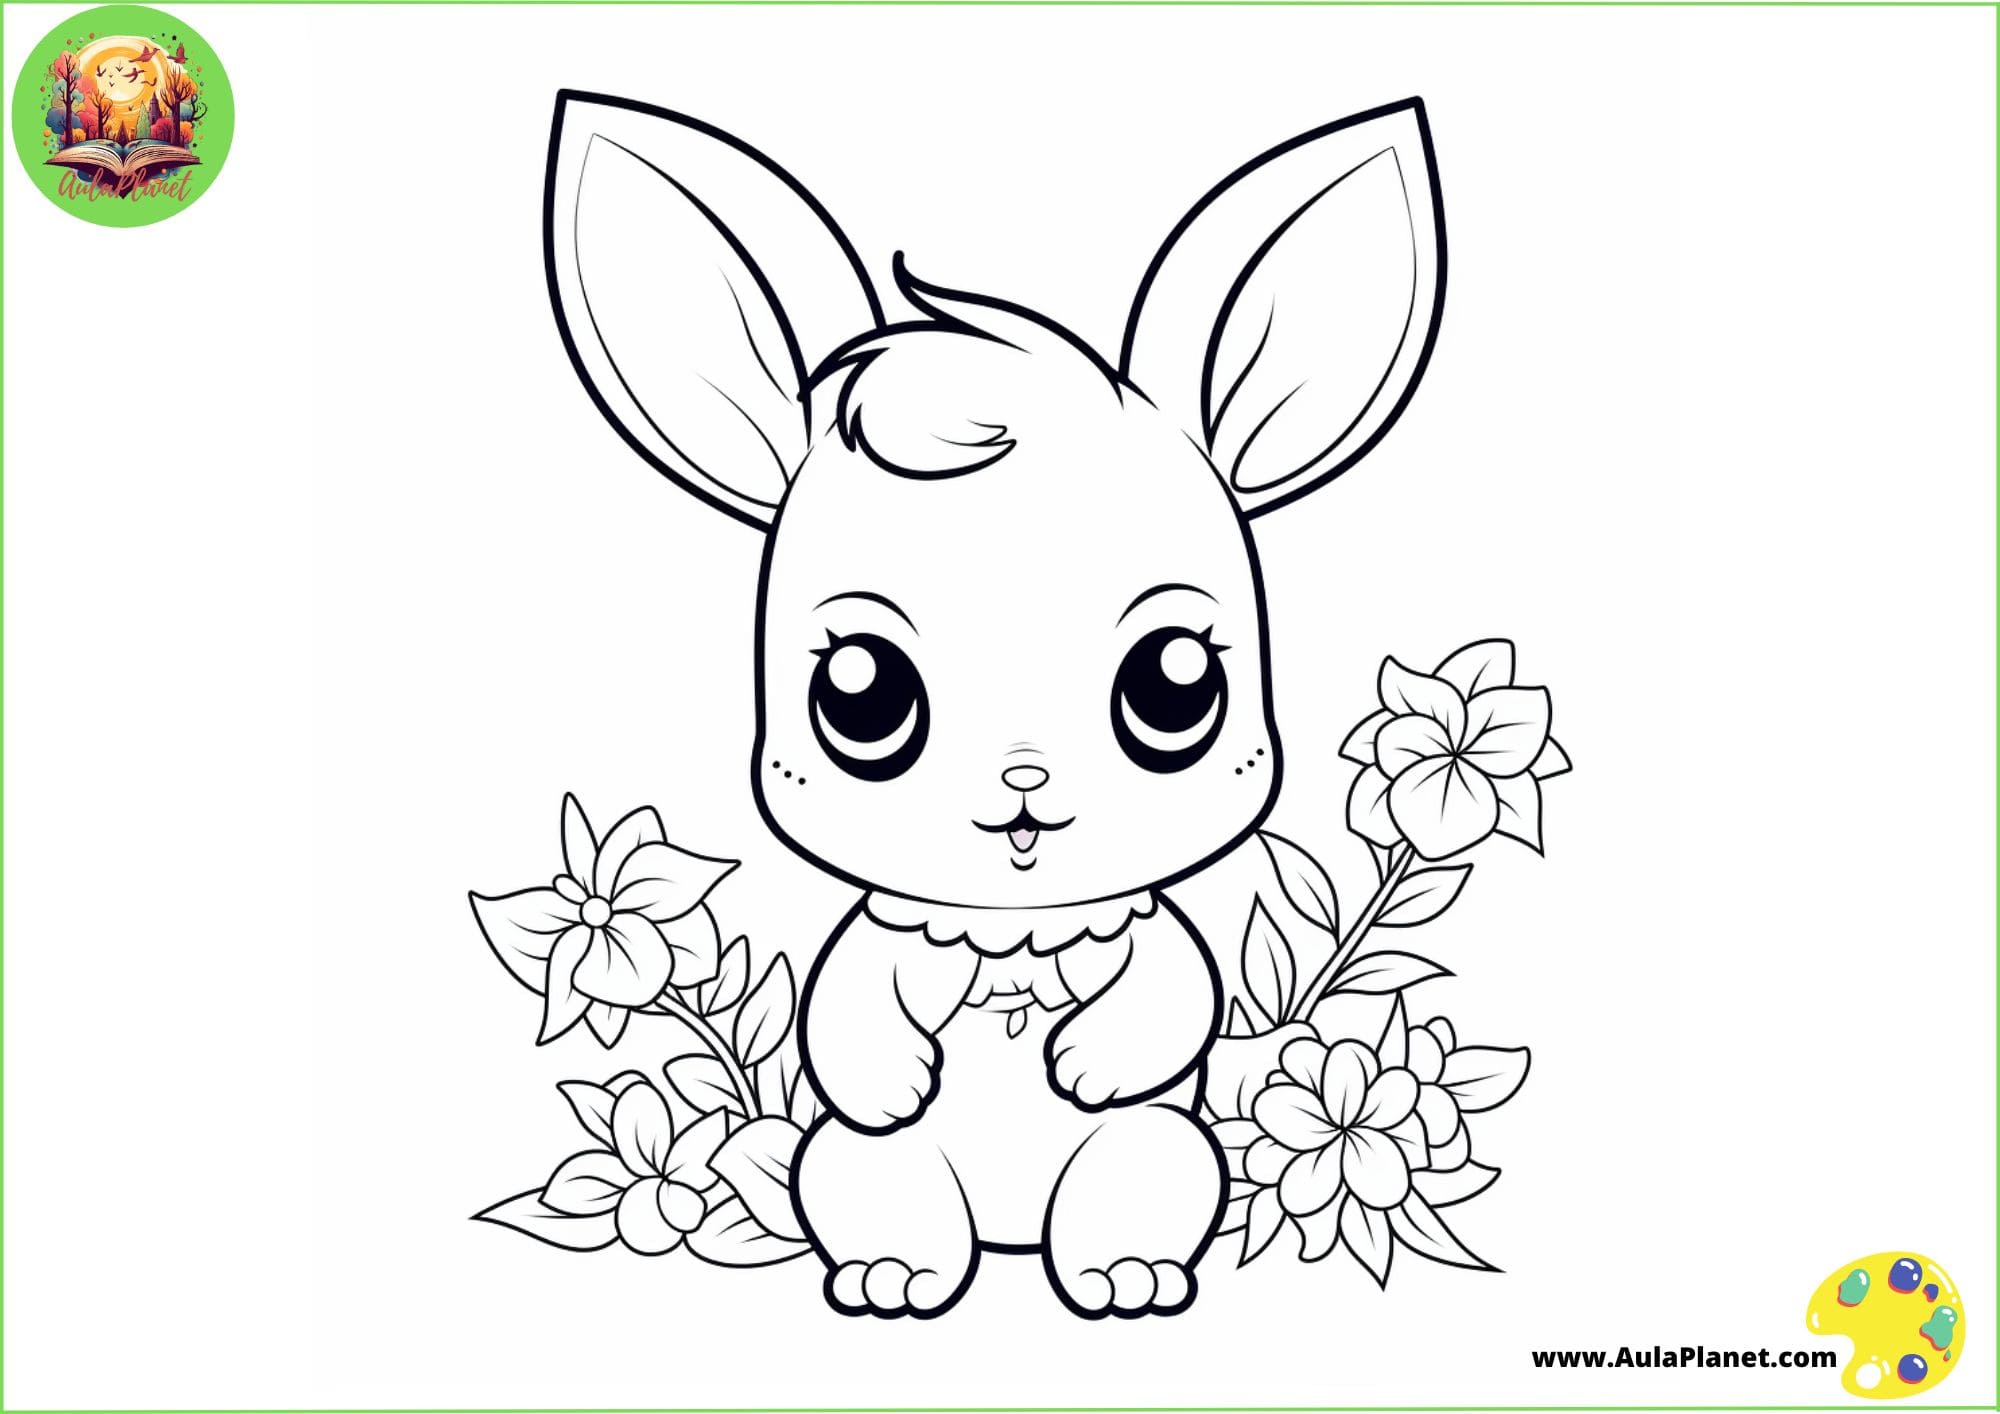 Dibujos de conejos para colorear e imprimir gratis